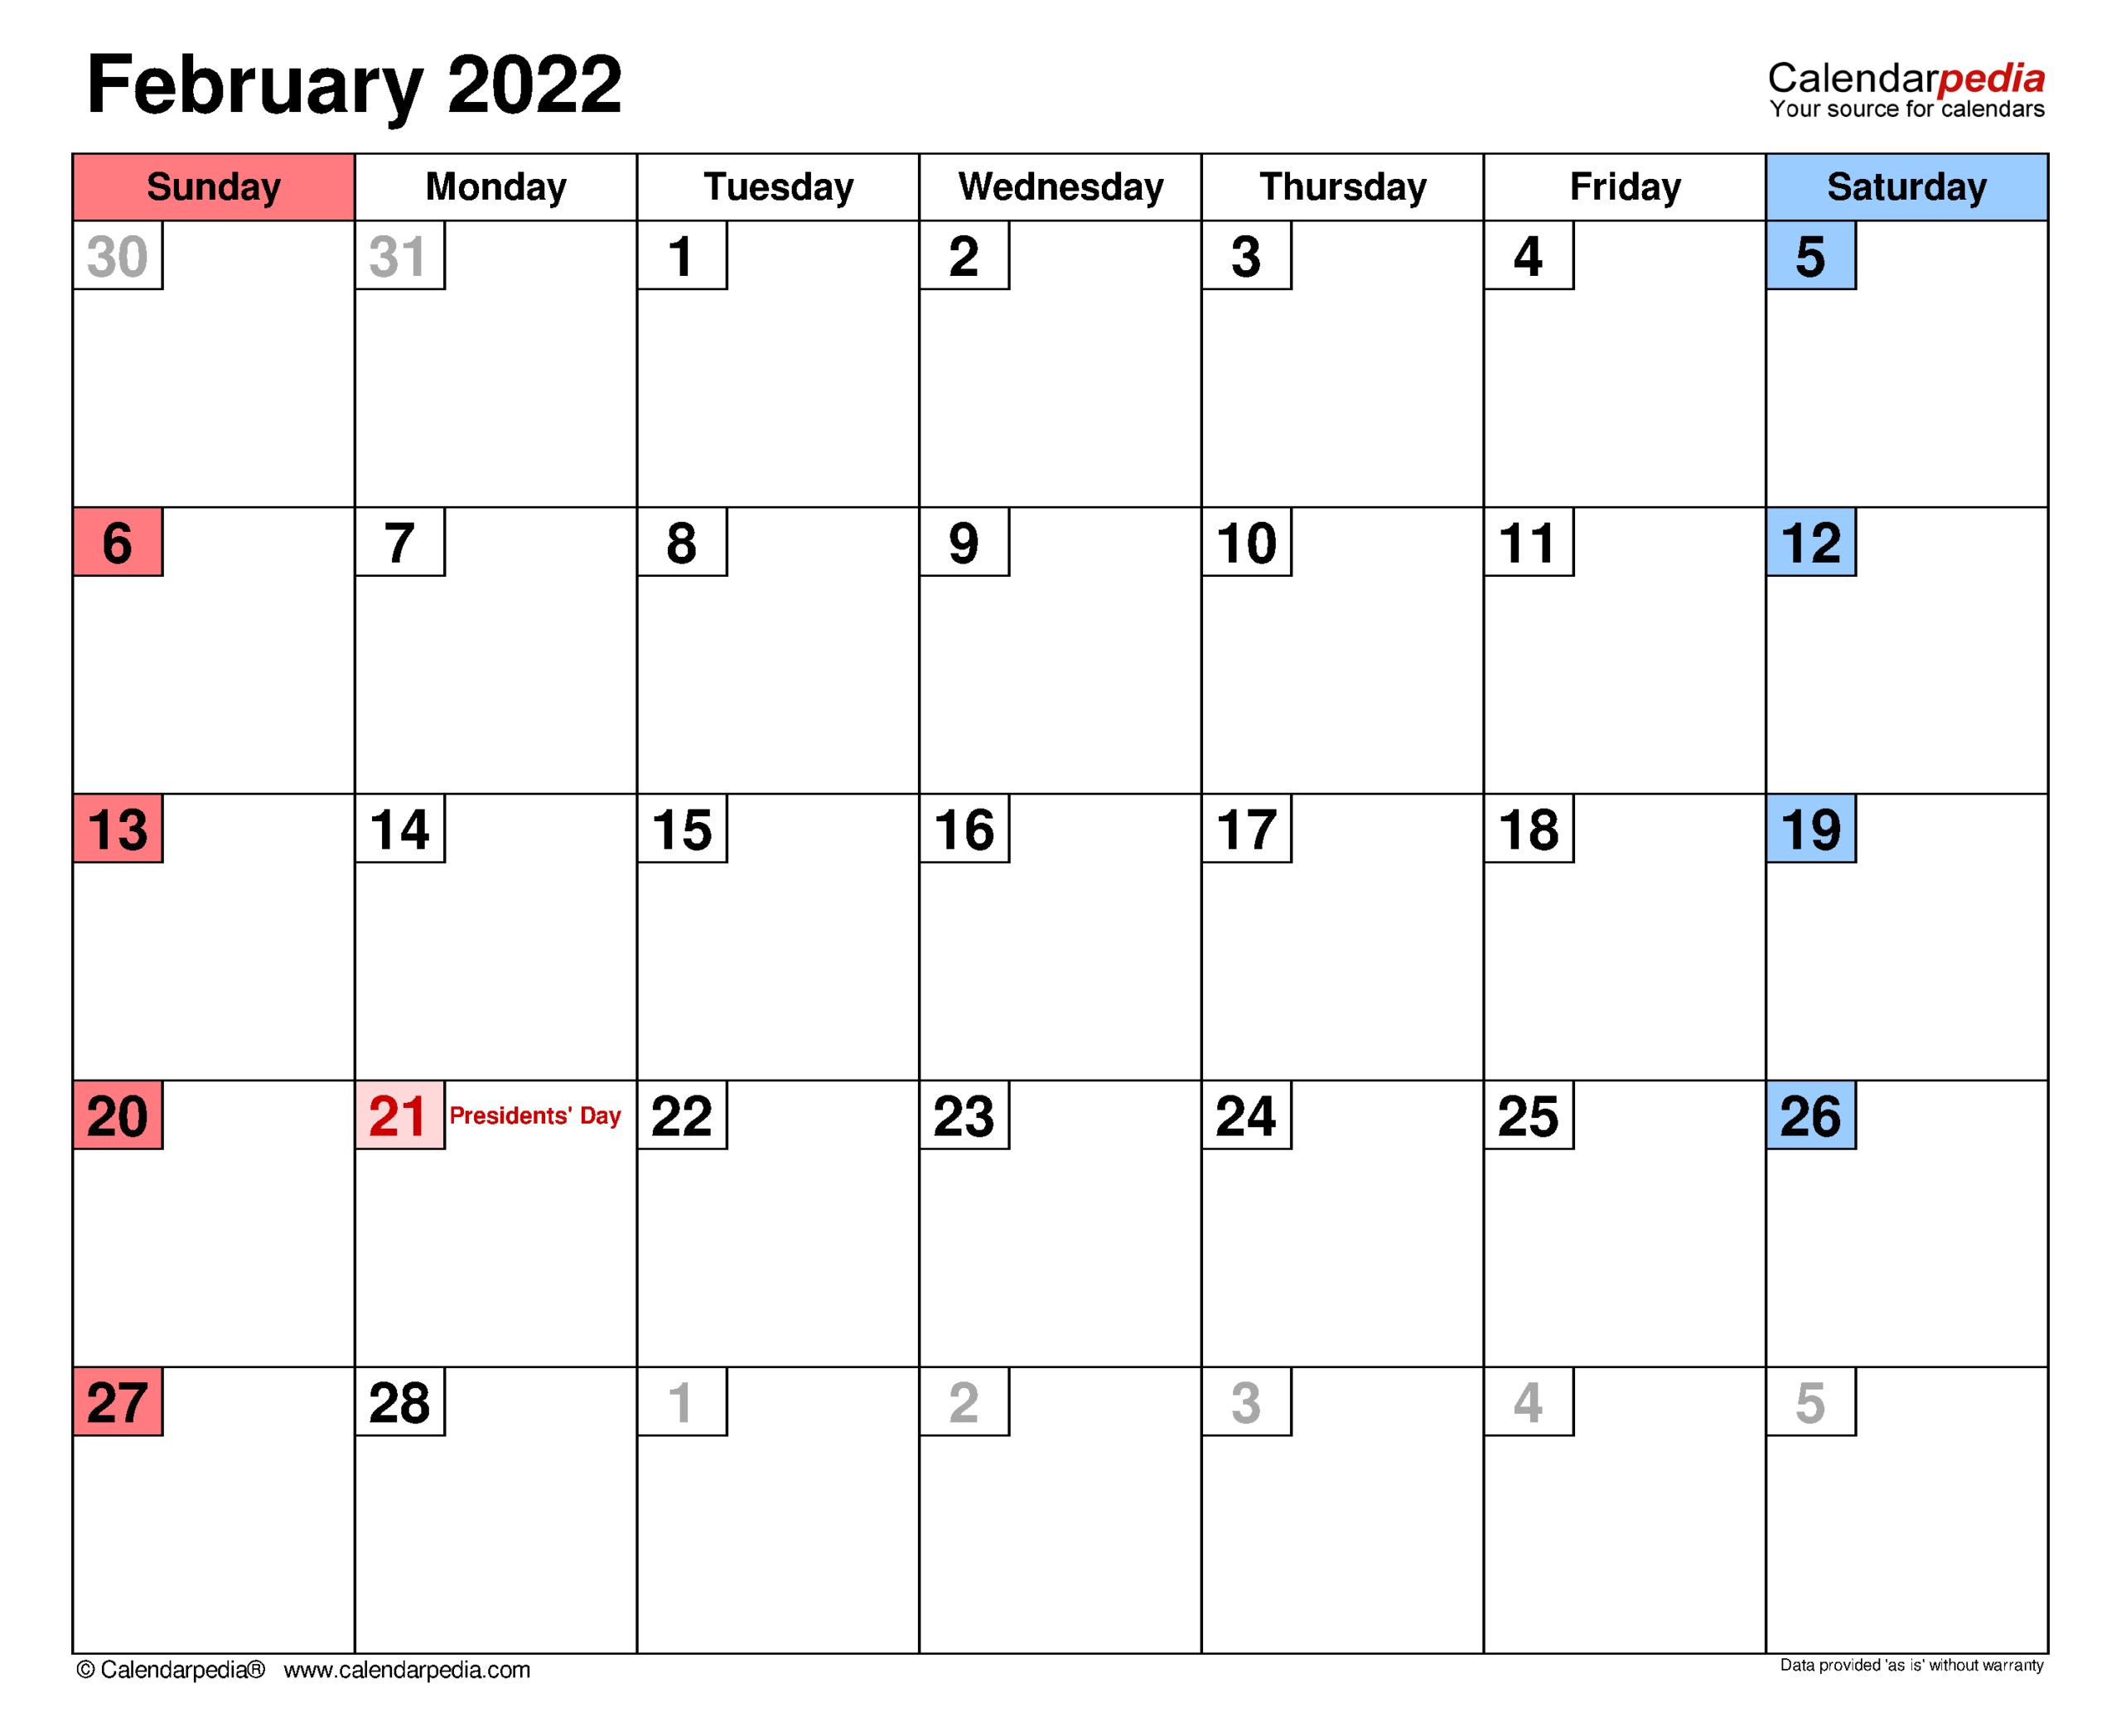 Get Calendar 2022 February With Islamic Dates